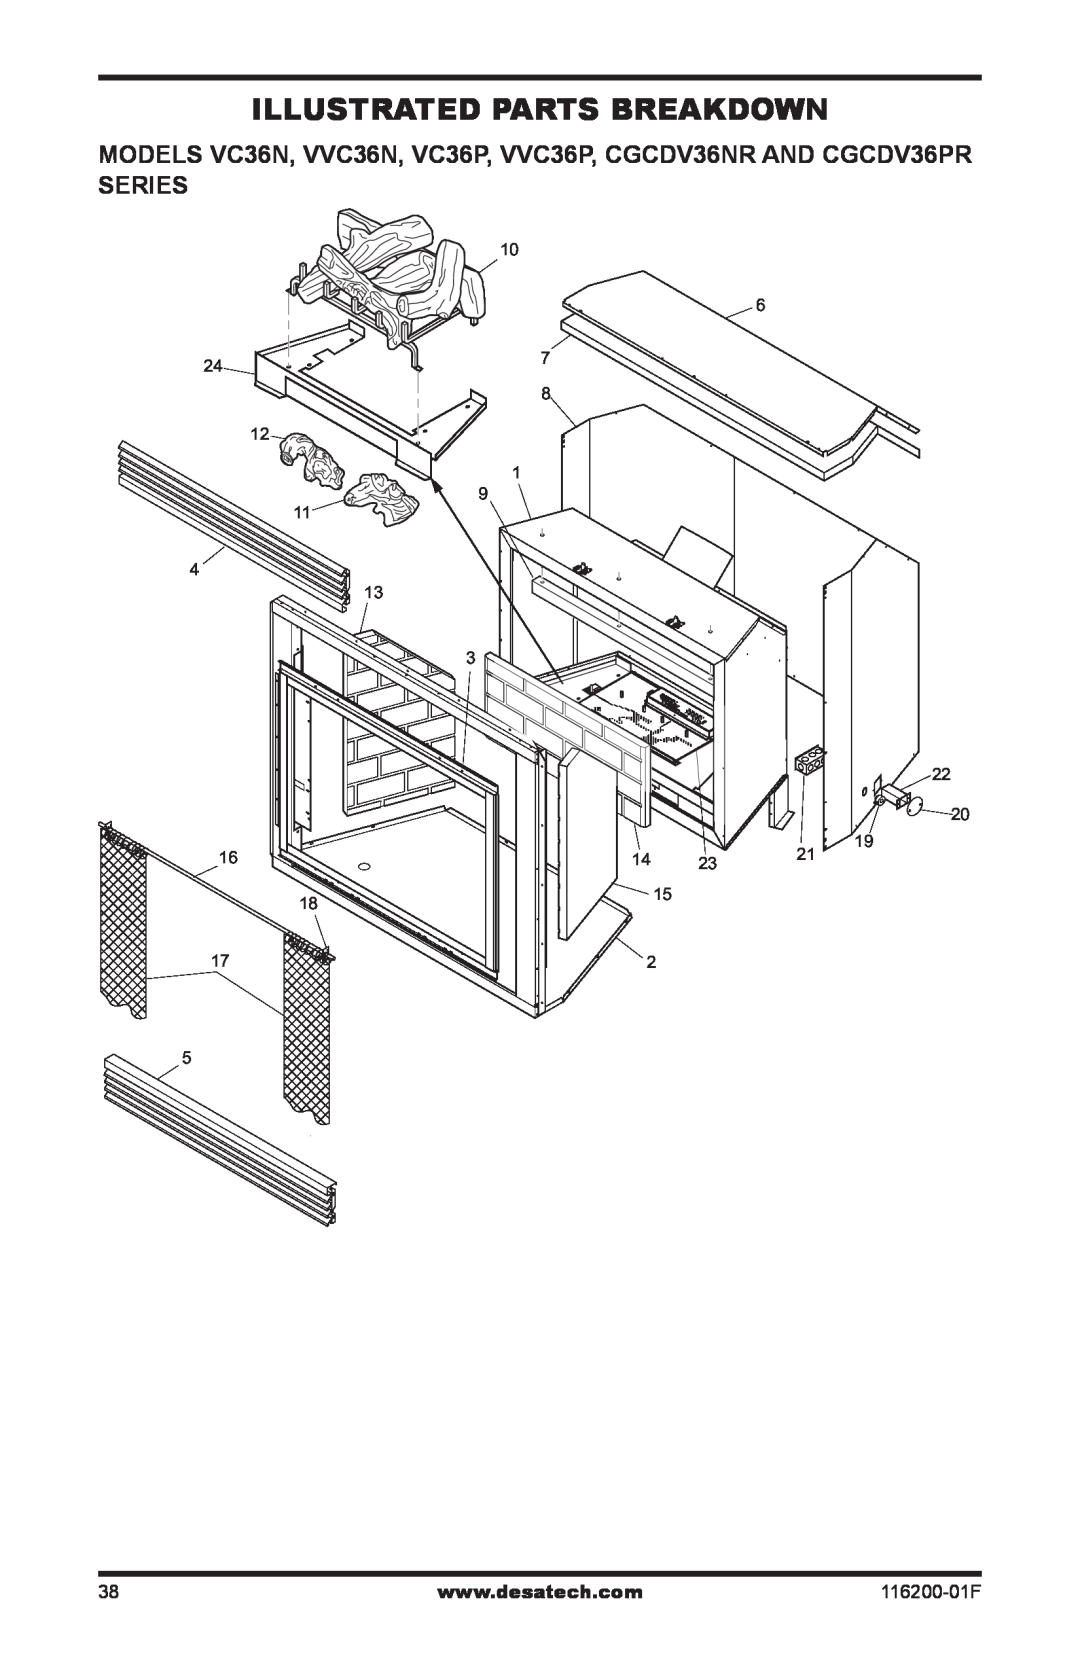 Desa (V)VC36N, CGCDV36PR installation manual Illustrated Parts Breakdown, 116200-01F 